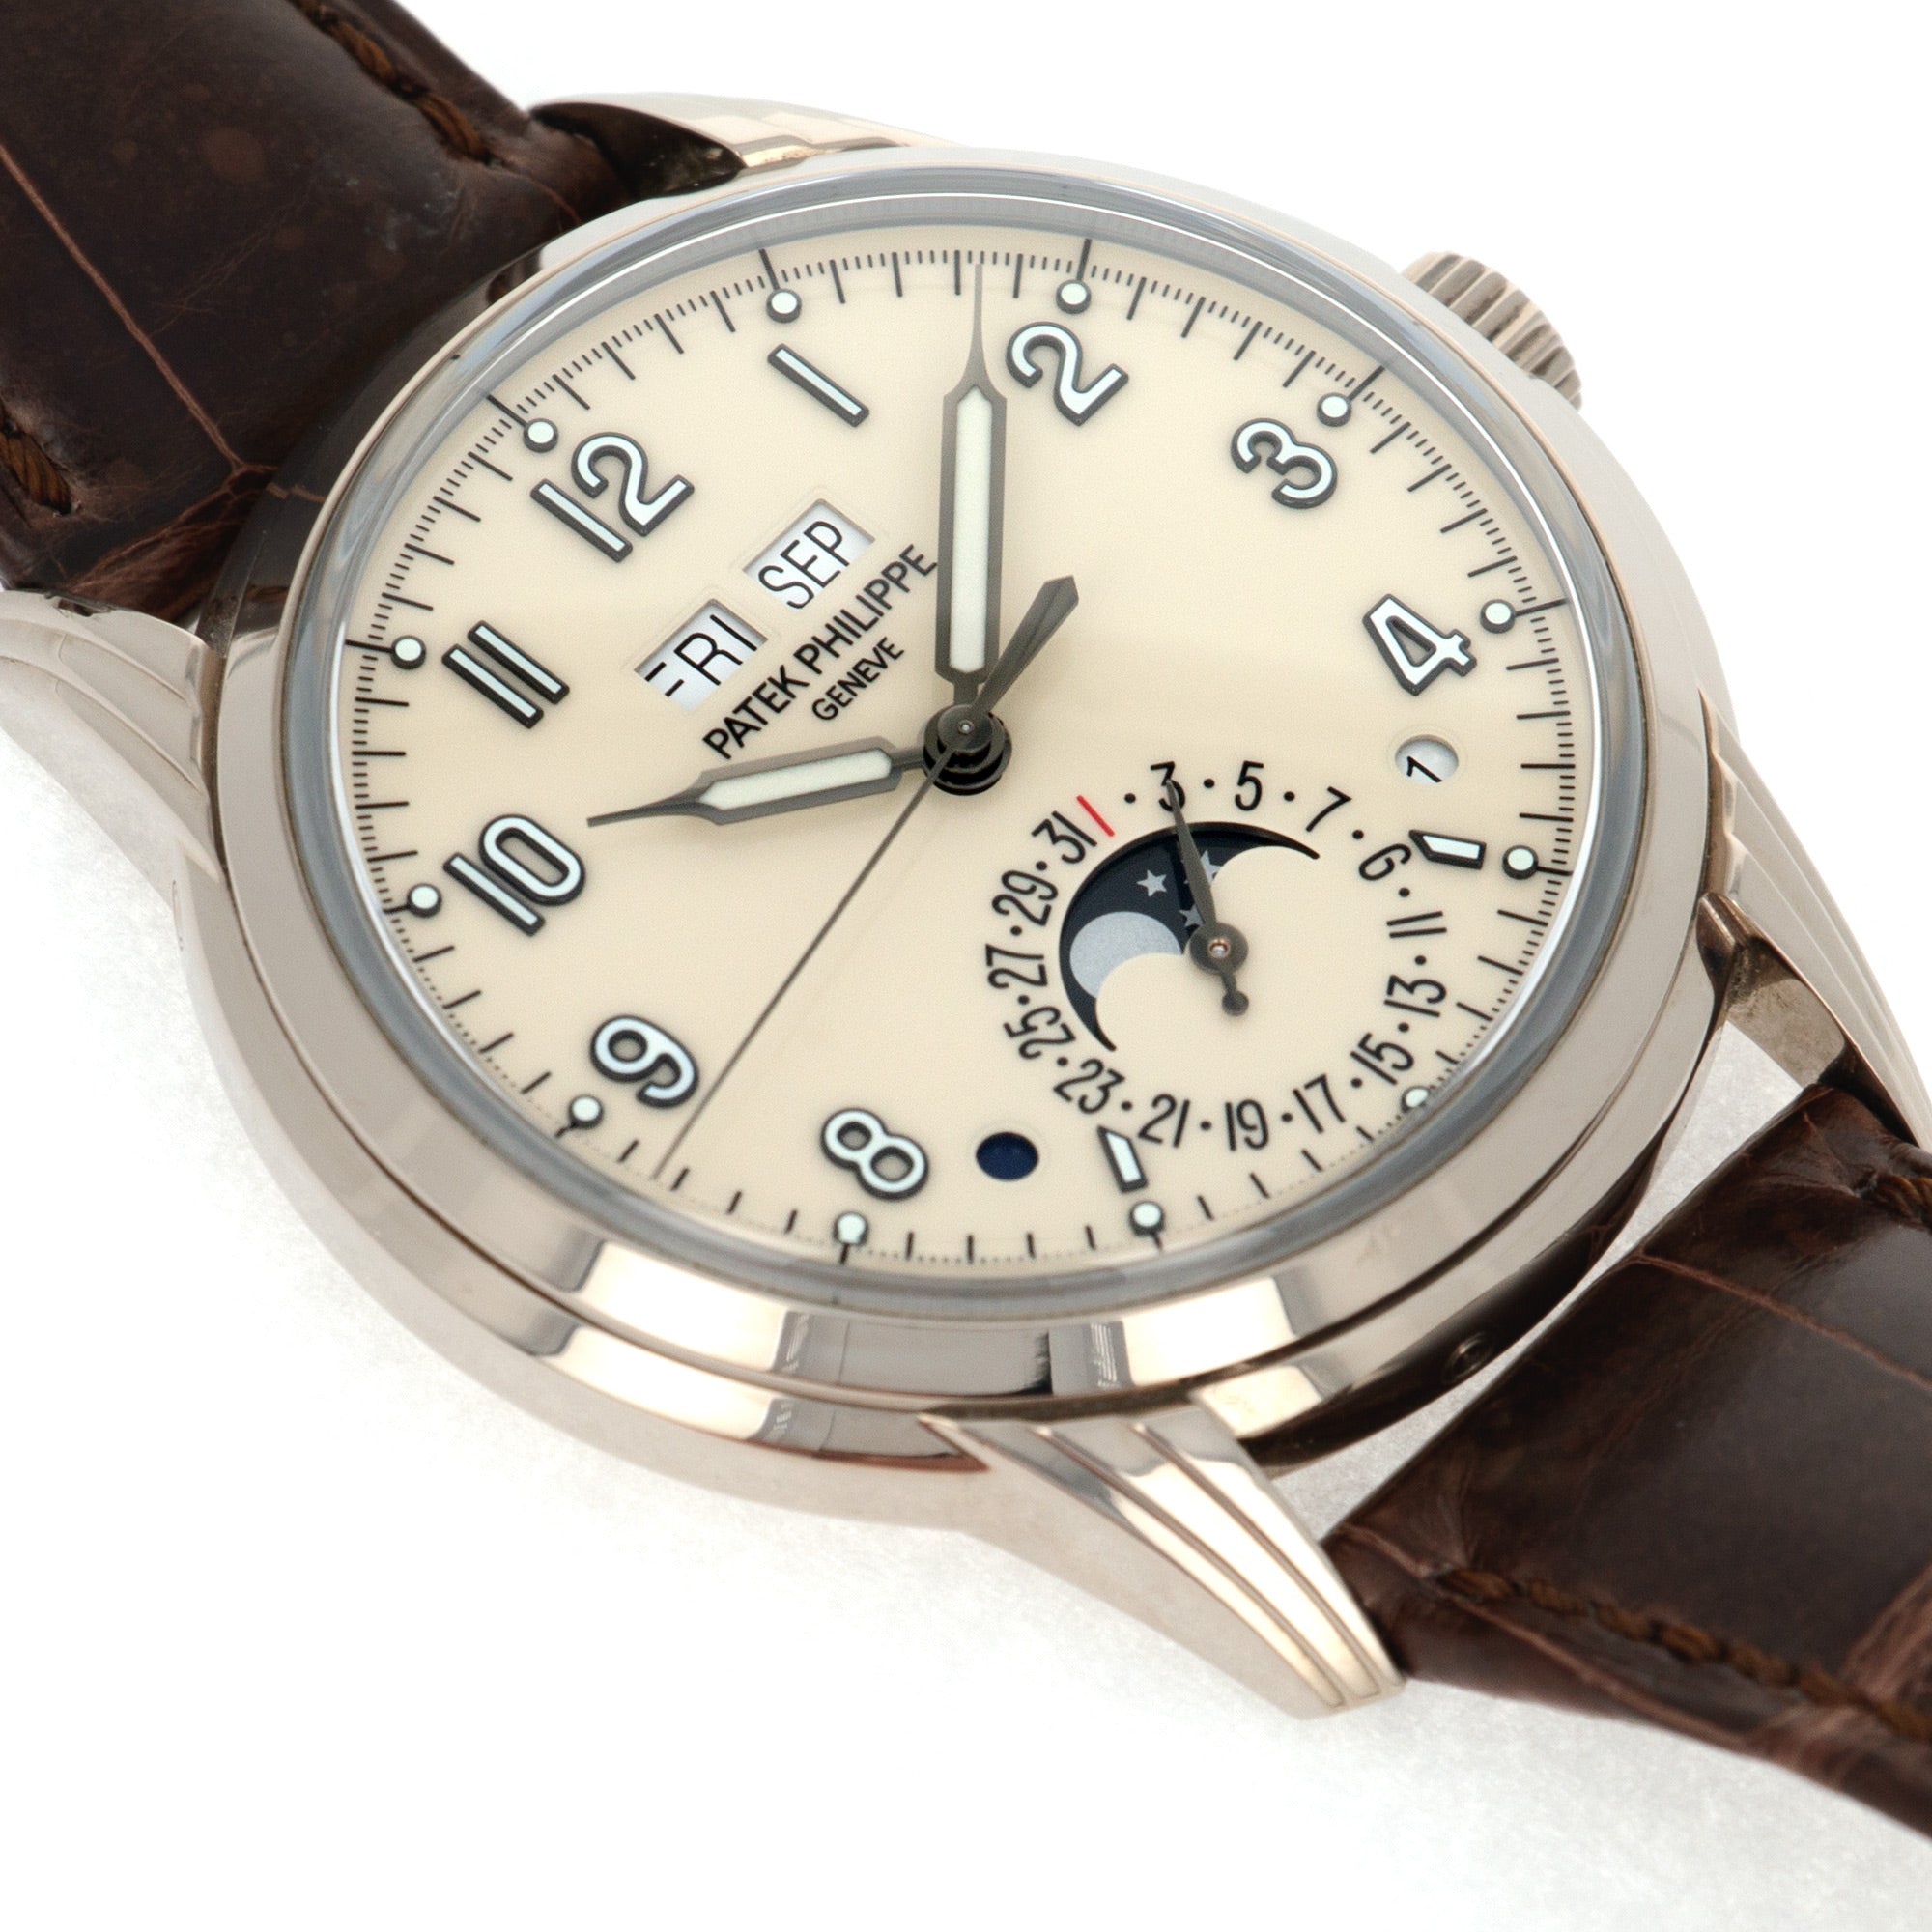 Patek Philippe - Patek Philippe White Gold Perpetual Calendar Watch Ref. 5320 - The Keystone Watches